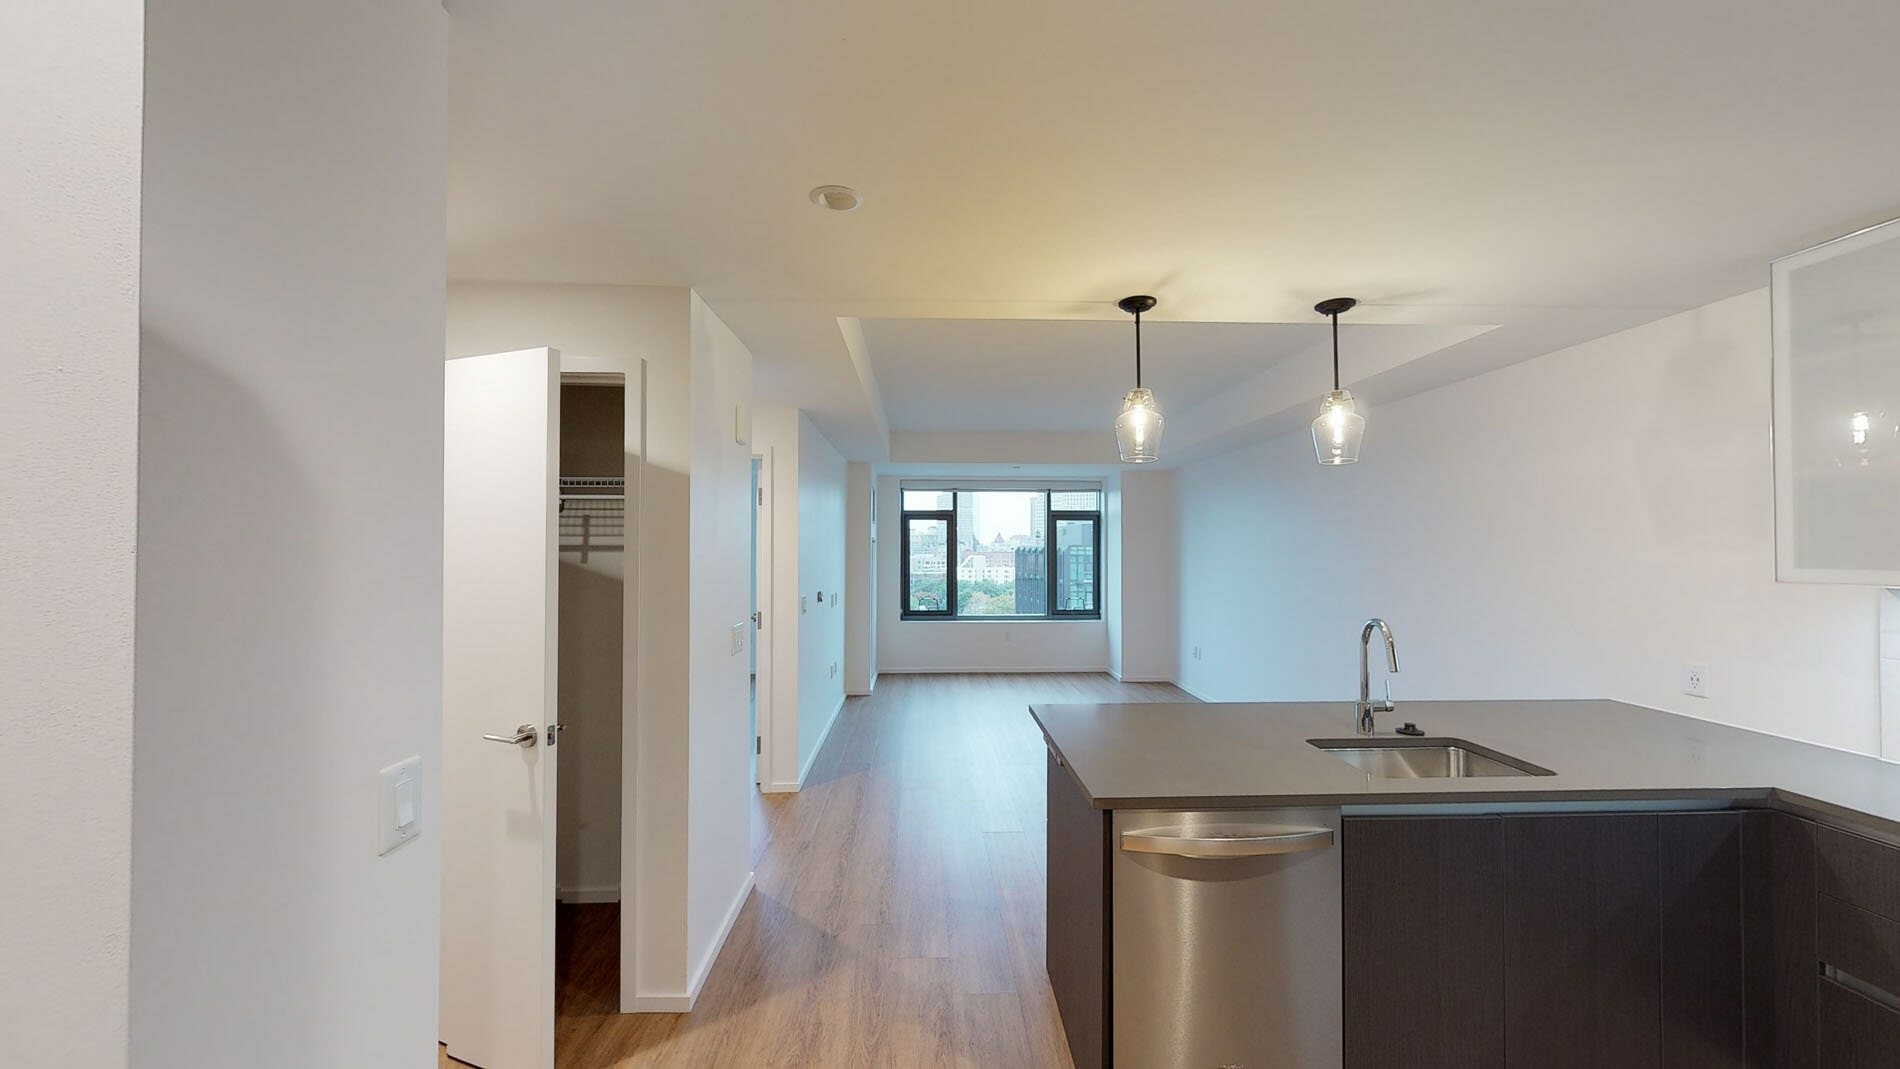 Photos of apartment on Waltham St.,Boston MA 02118